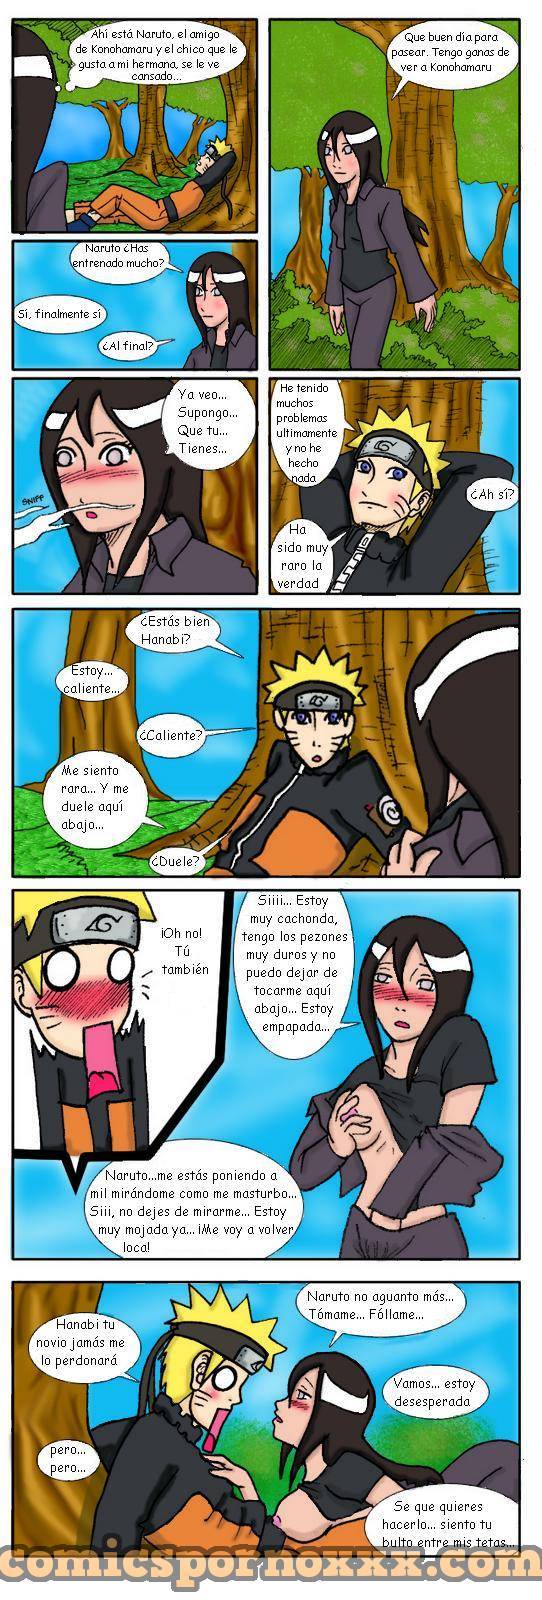 Naruto Uzumaki y el Desodorante - 4 - Comics Porno - Hentai Manga - Cartoon XXX